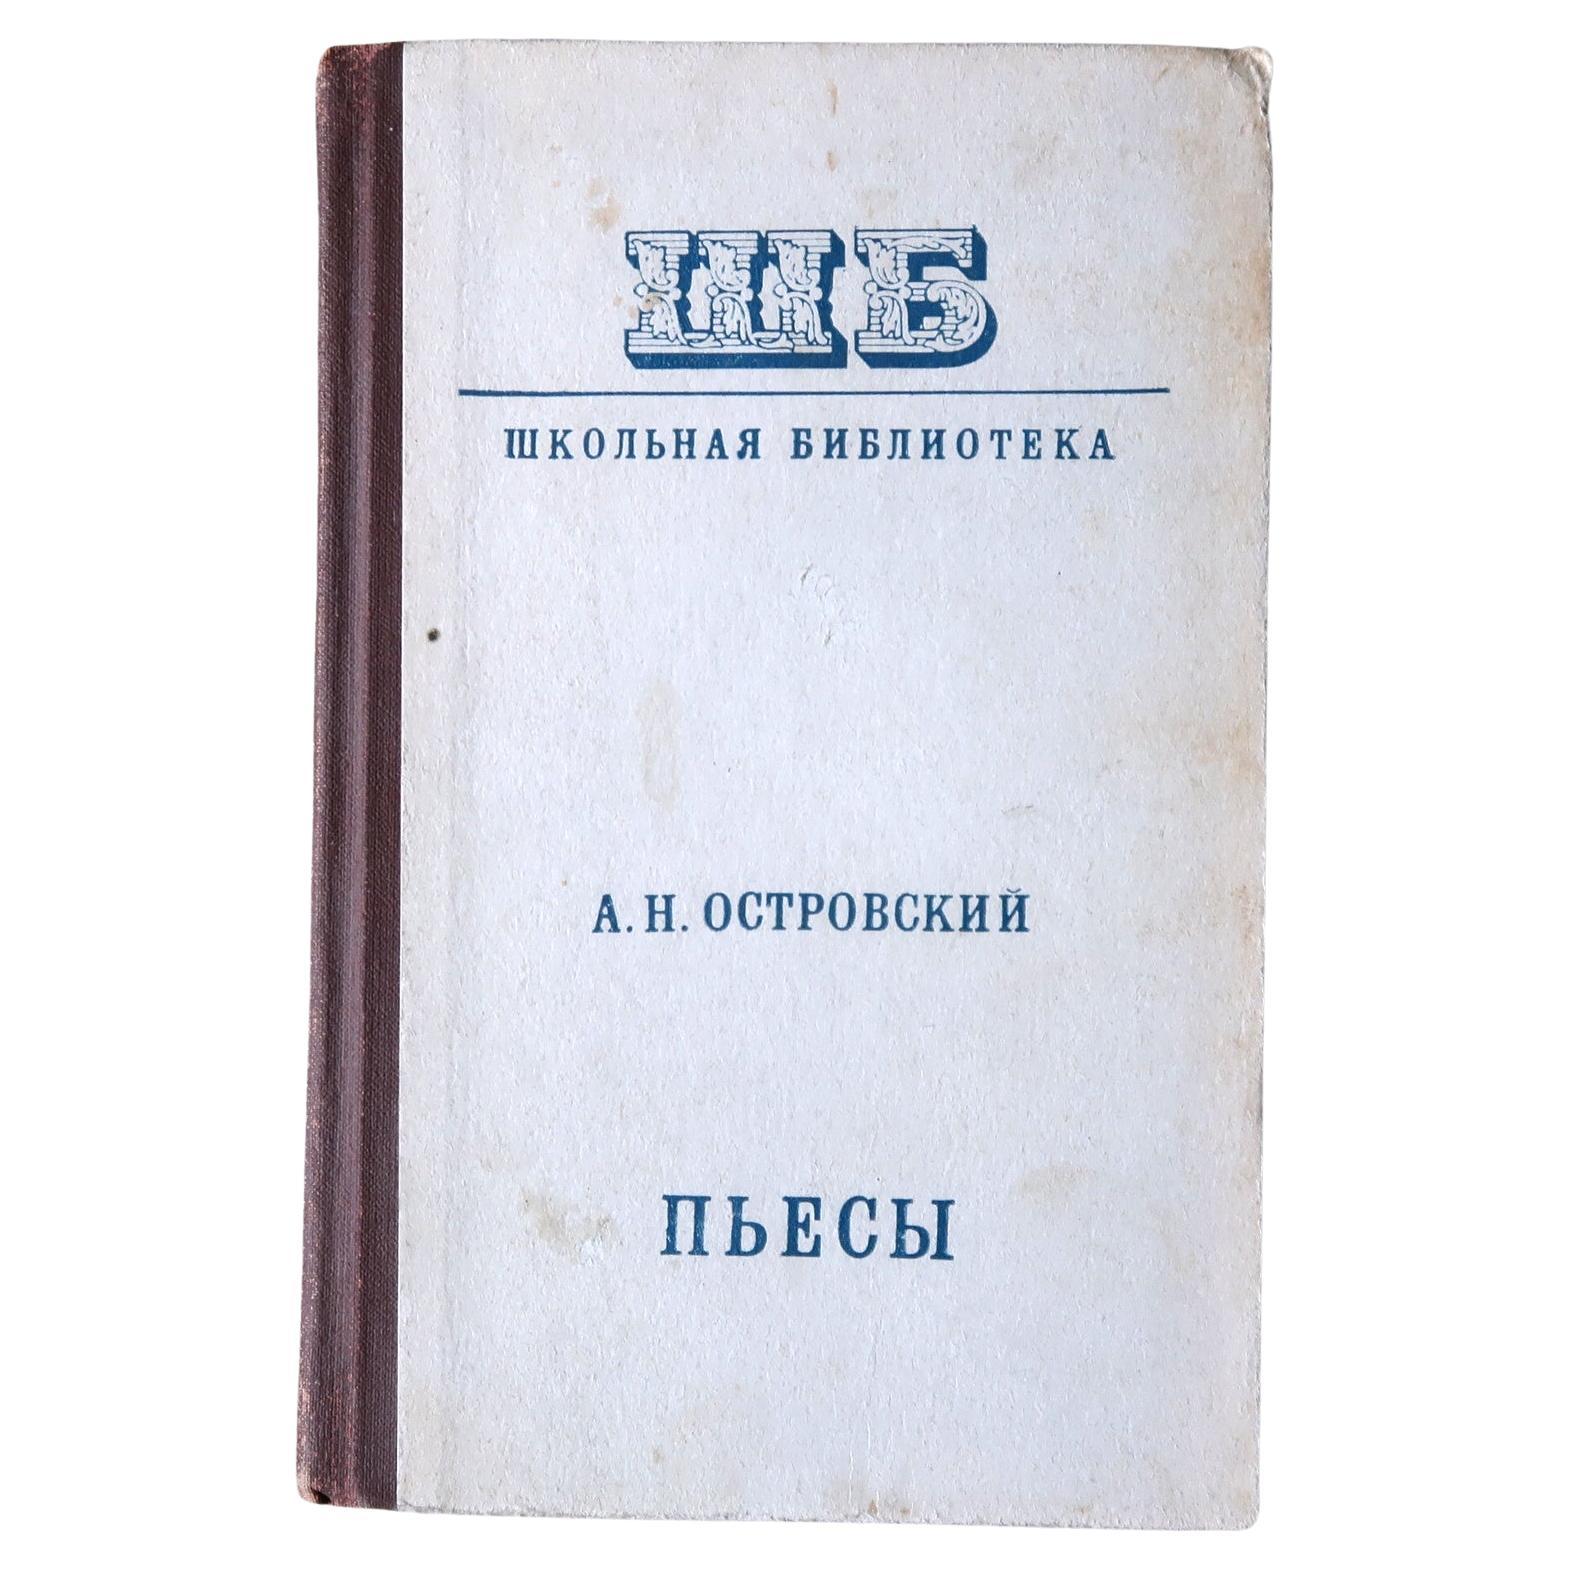 Livre vintage de l'URSS : Plays by Aju Ny Astrovsky - Trésors théâtrals, 1J118